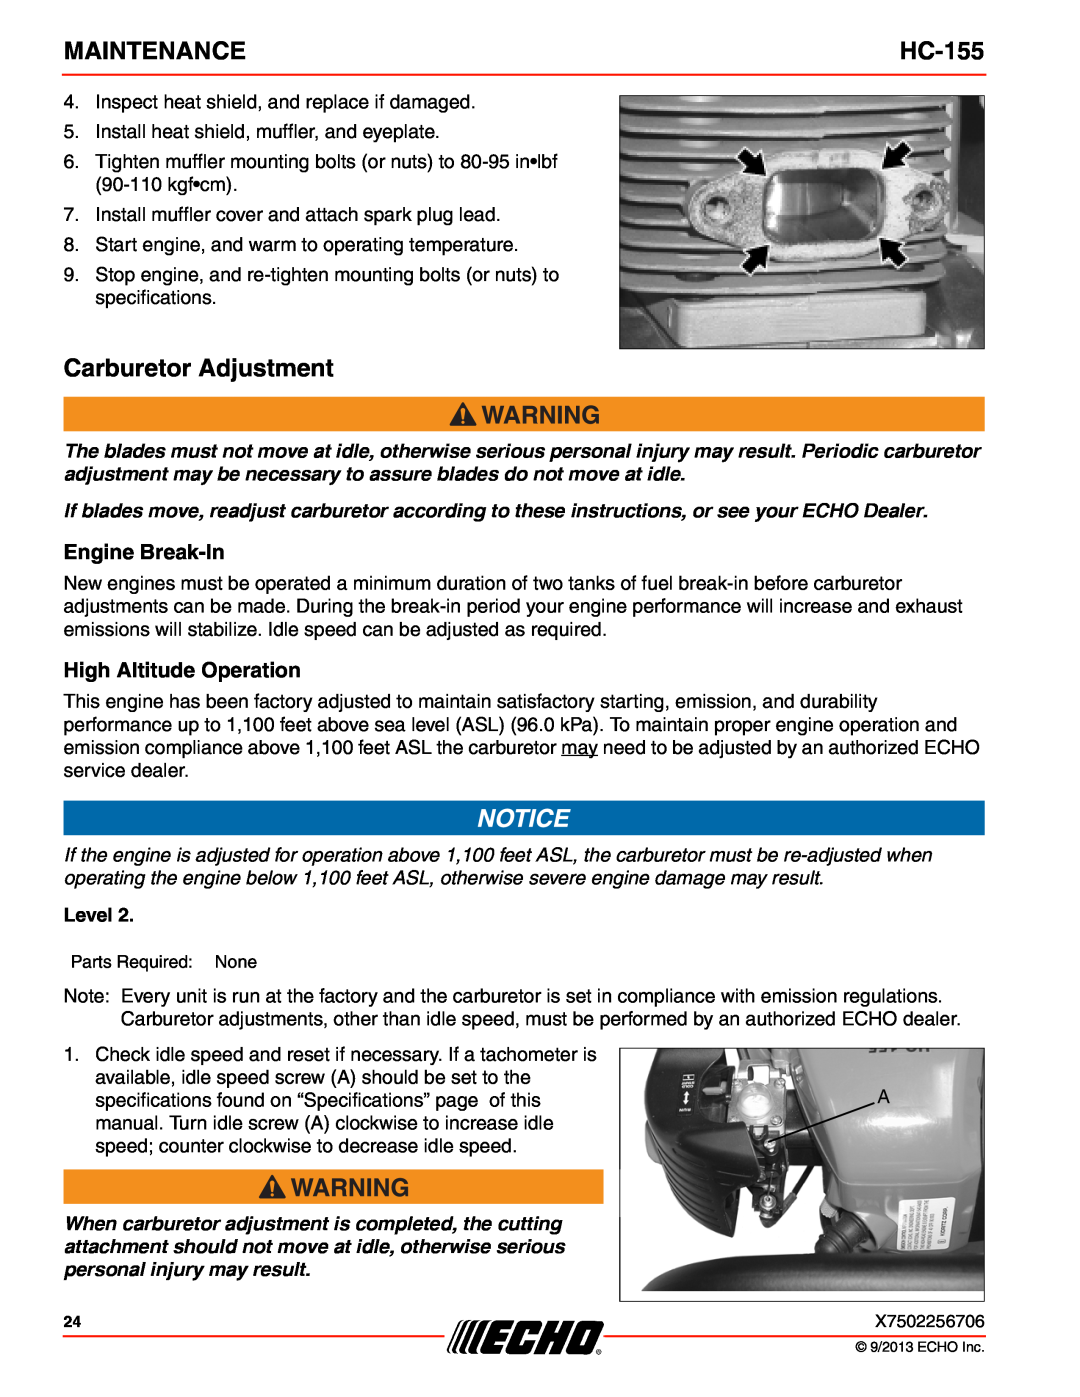 Echo HC-155 specifications Carburetor Adjustment, Engine Break-In, High Altitude Operation, Maintenance, Level 